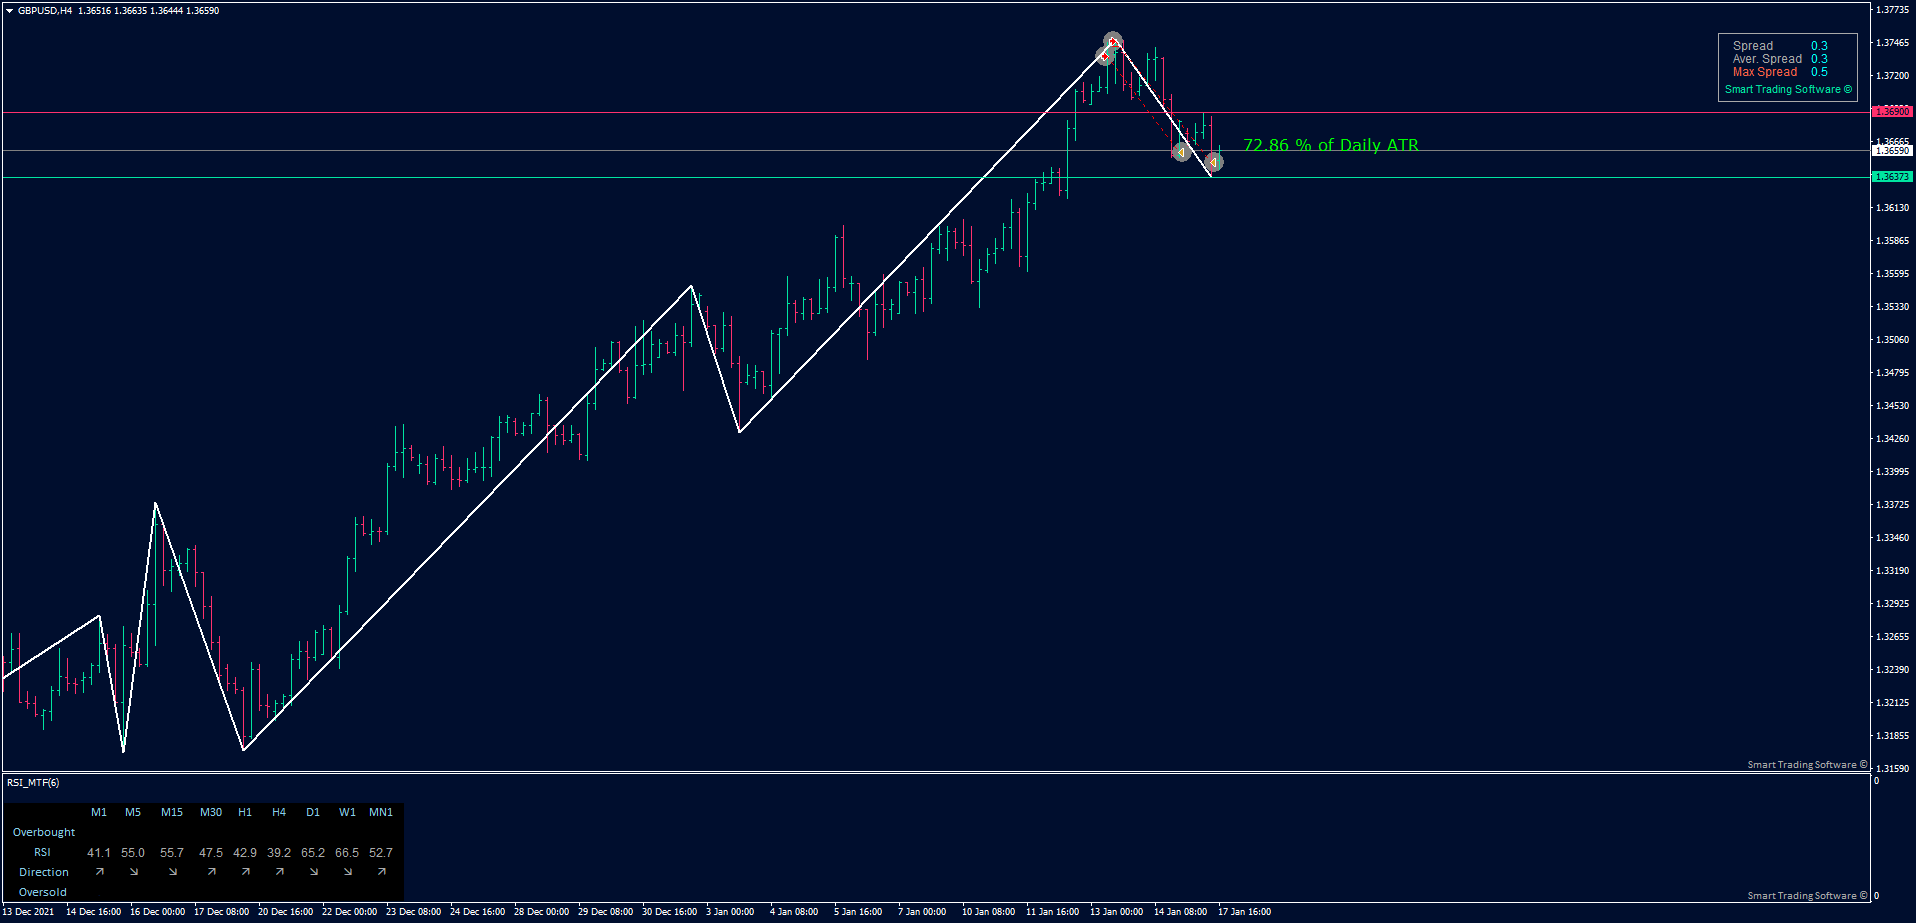 GBP/USD H4 chart